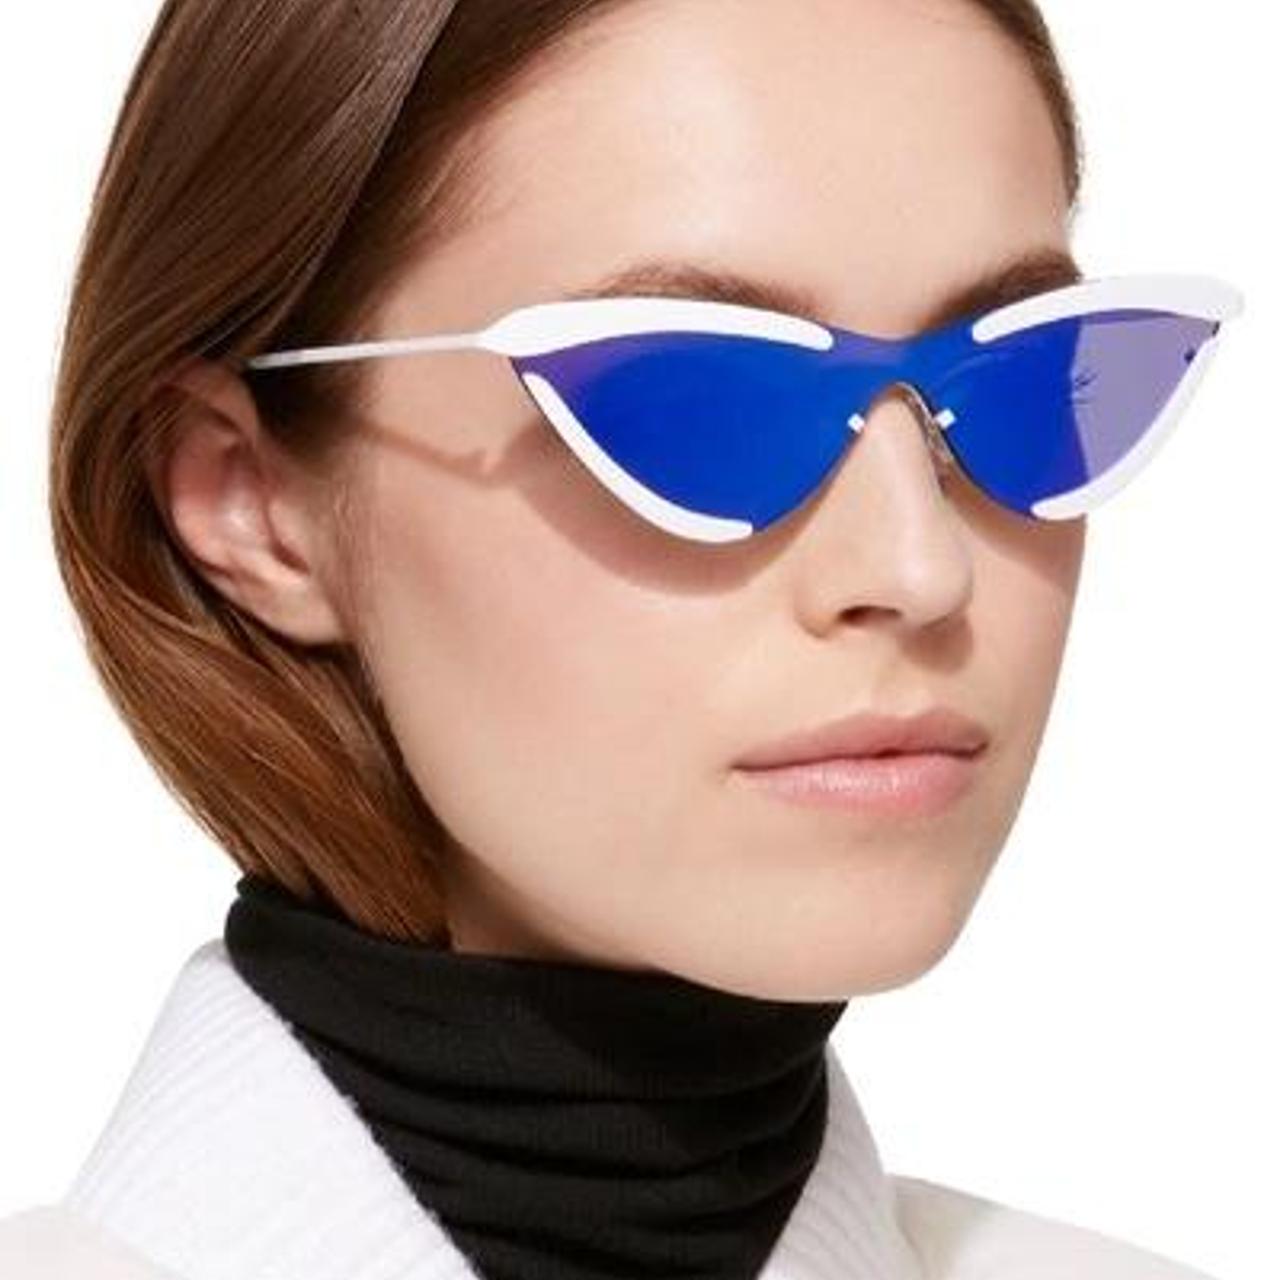 Adam Selman Women's Blue and White Sunglasses (4)